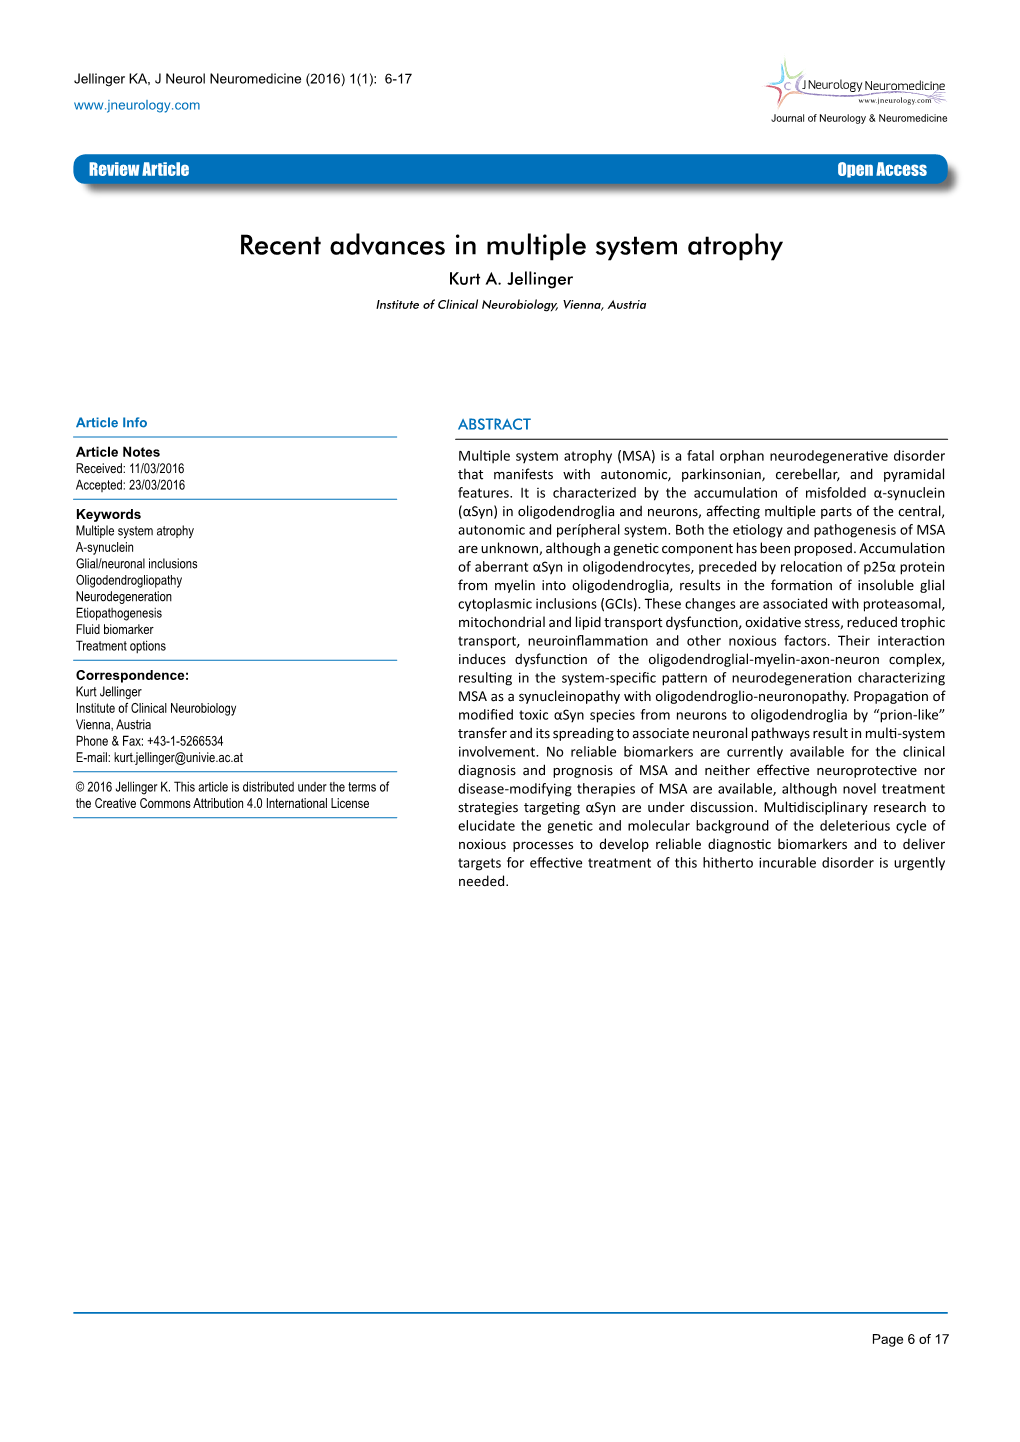 Recent Advances in Multiple System Atrophy G